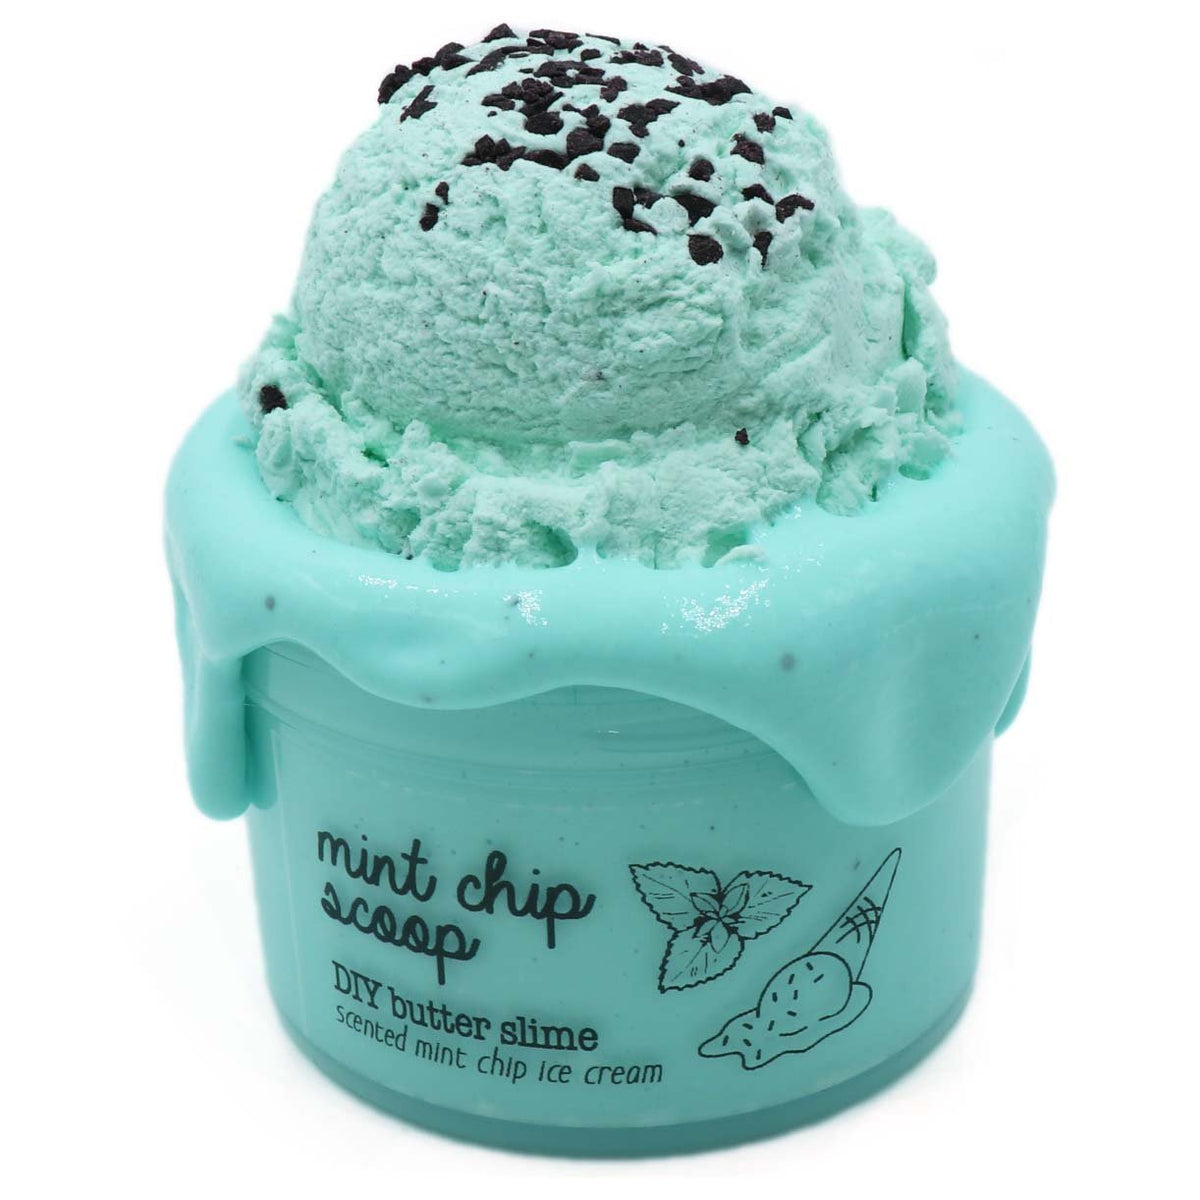 Mint Chip Scoop Green Sprinkles Summer Ice Cream DIY Butter Slime Fantasies Shop 7oz Front View